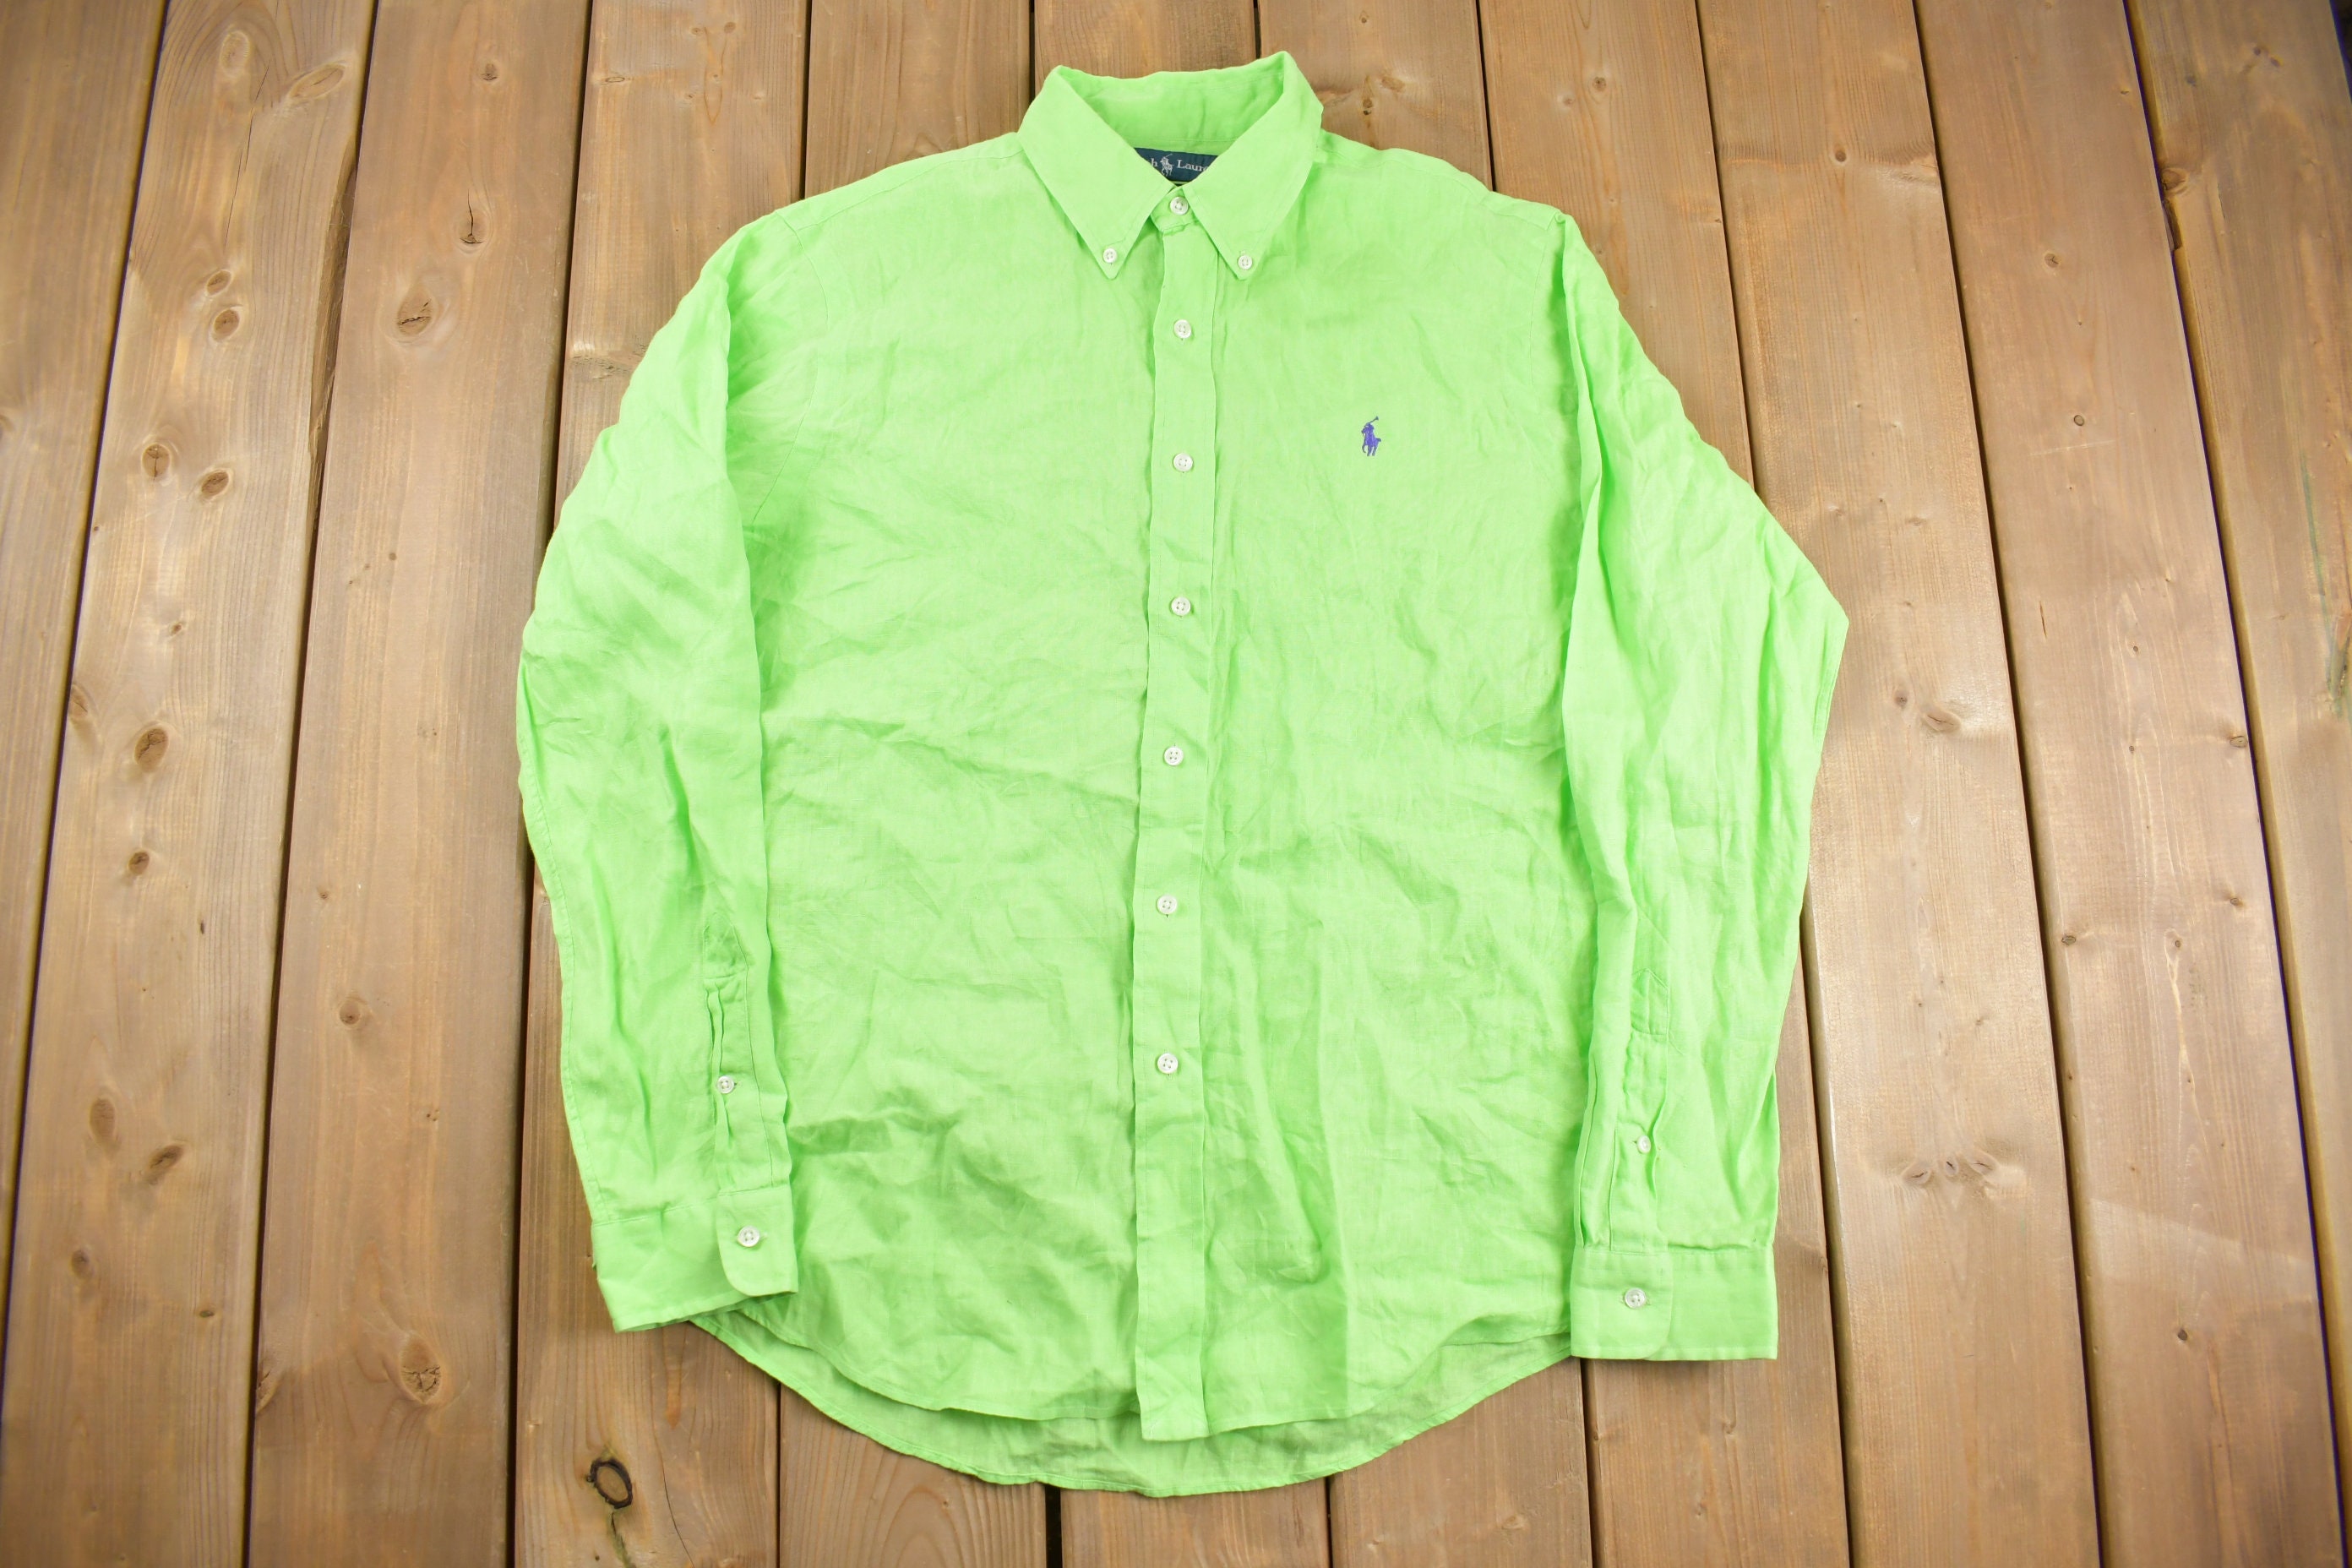 Green Neon Shirt Etsy Canada